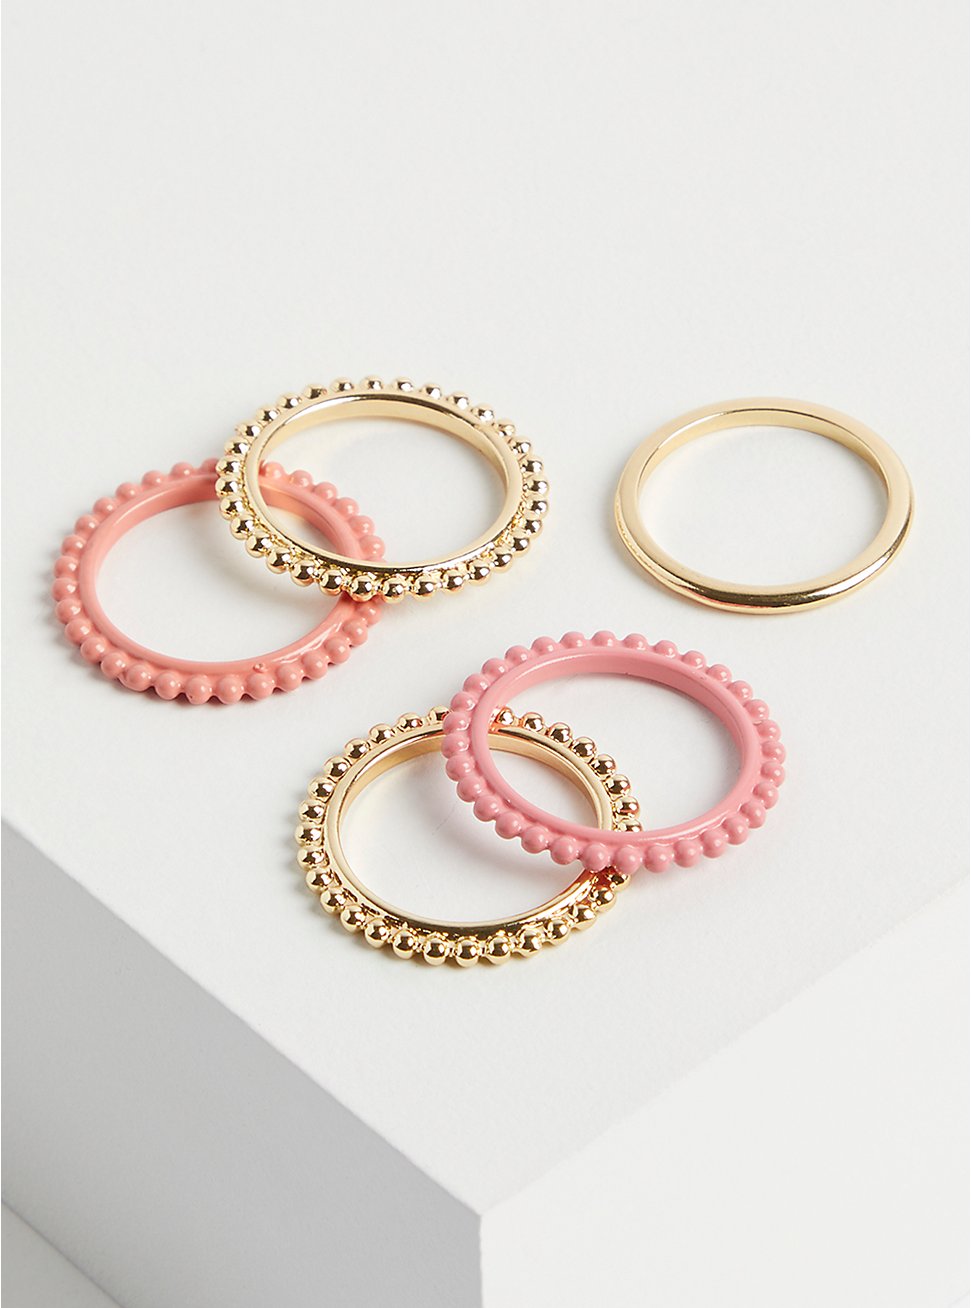 Plus Size Texturized Ring Set - Matte Coral & Pink, GOLD, hi-res